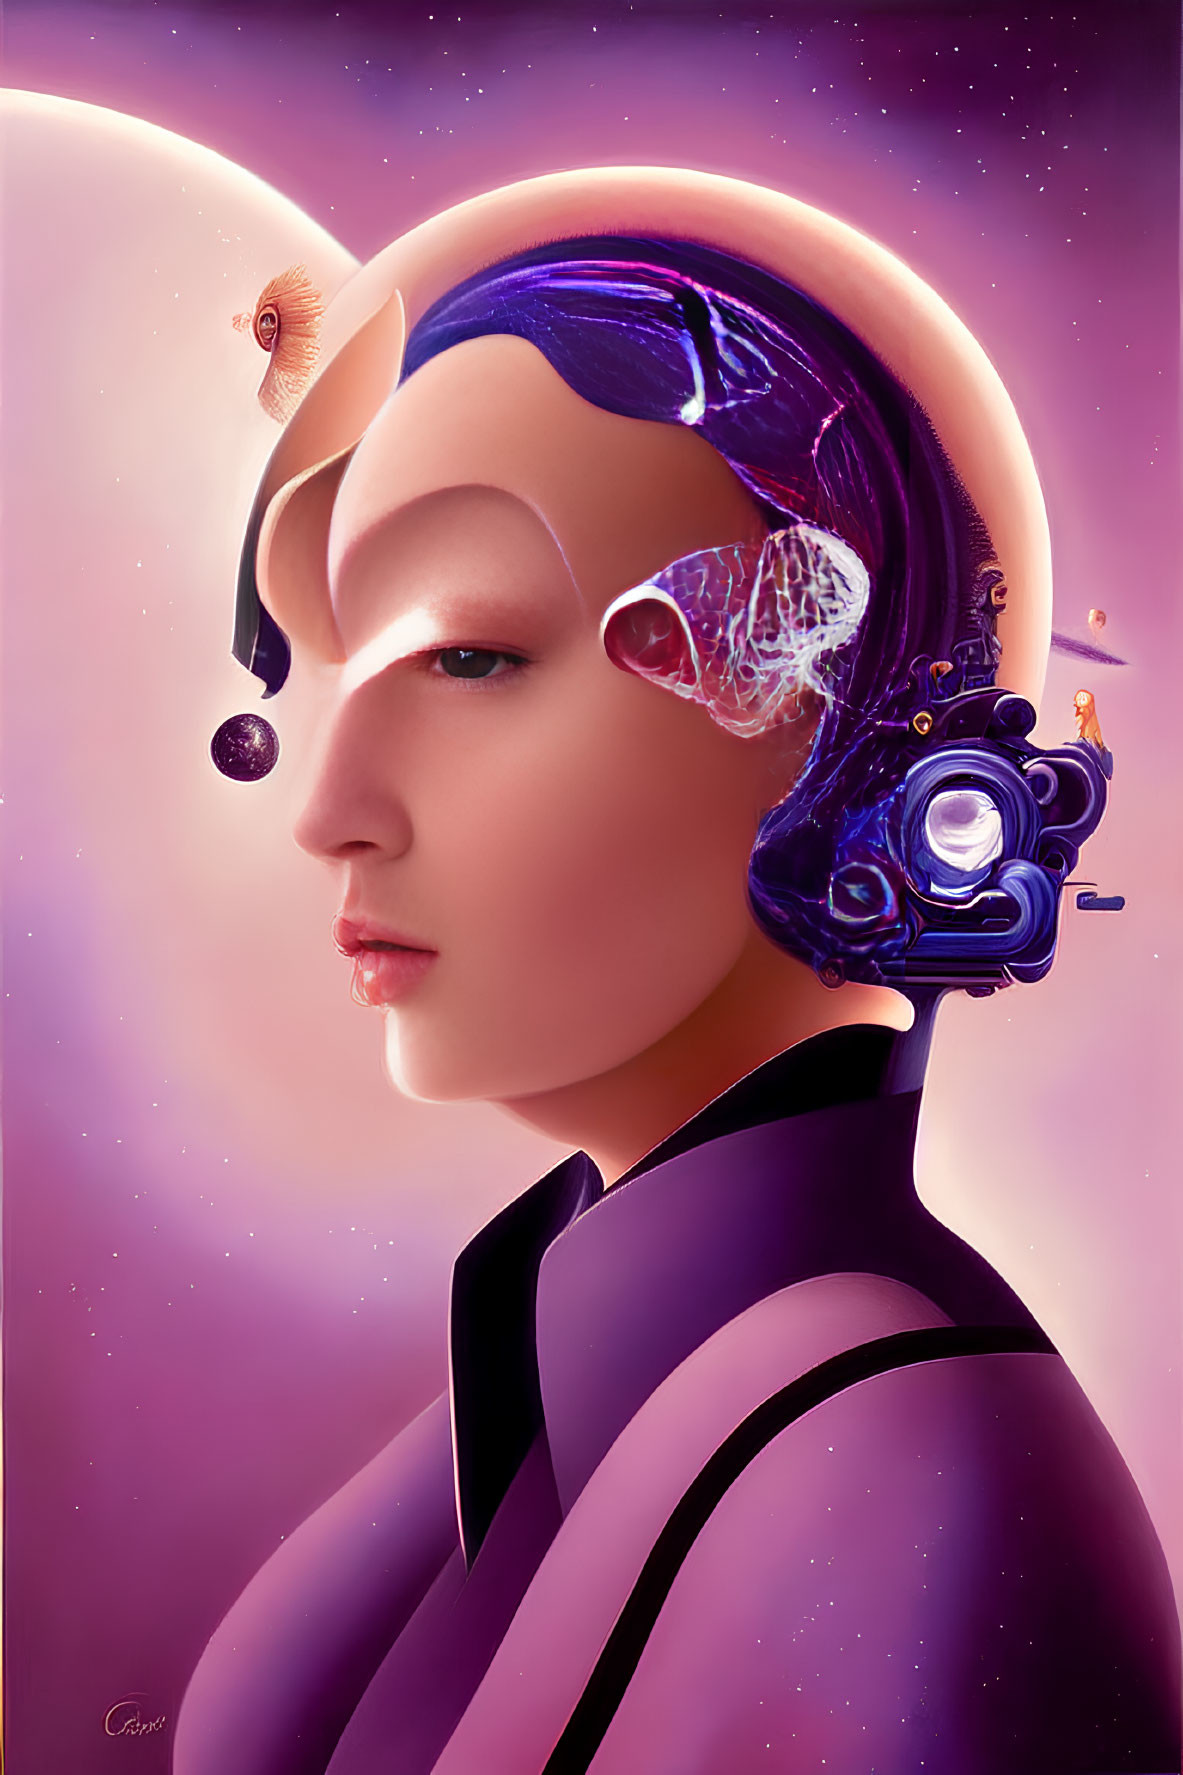 Futuristic female figure with mechanical headpiece and celestial backdrop